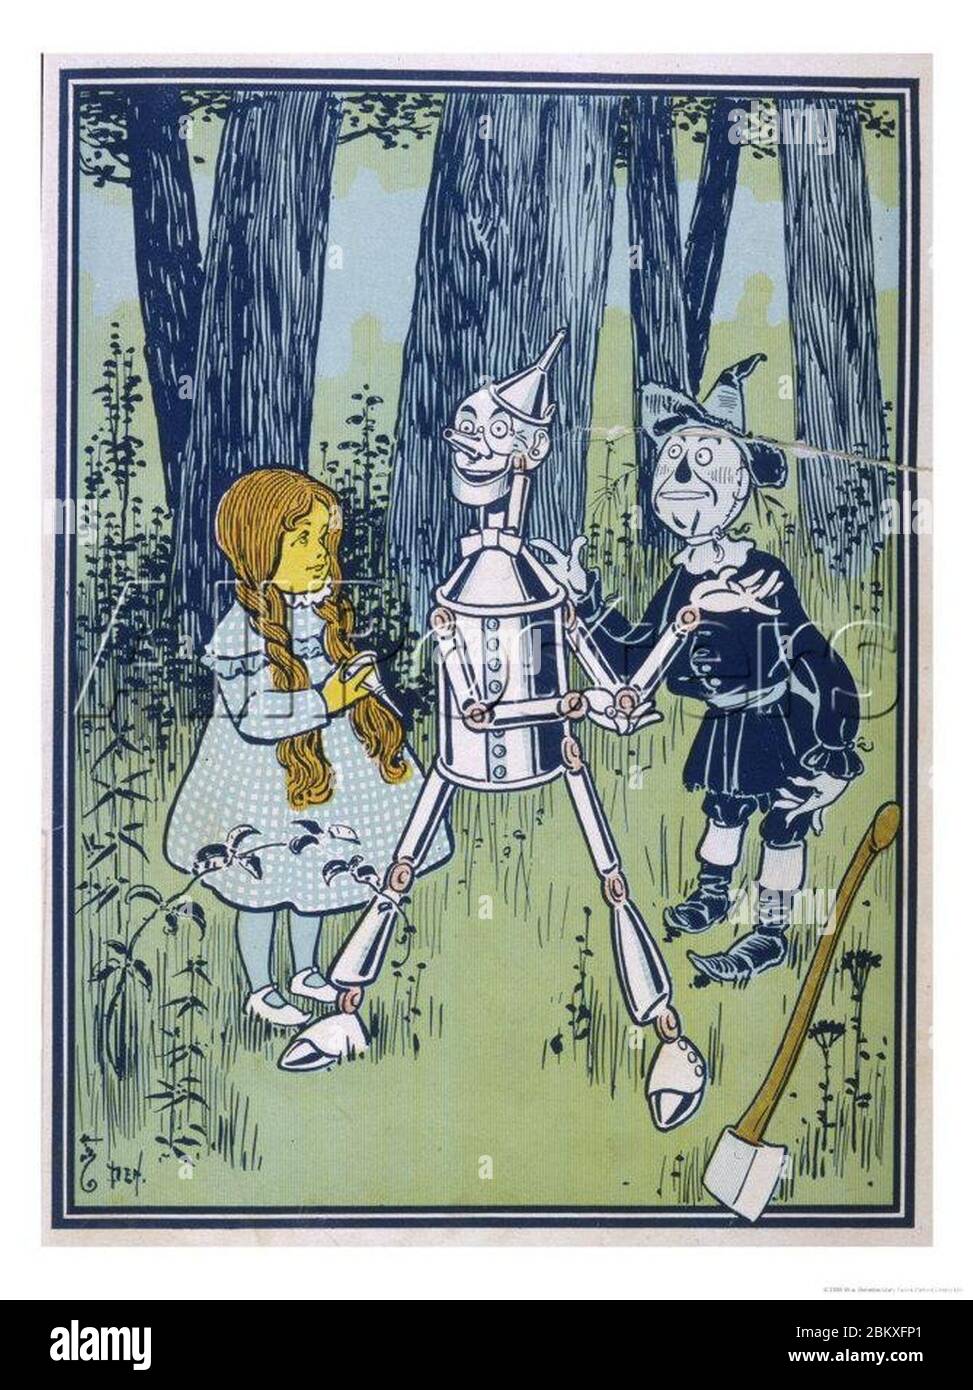 Illustration by W. W. Denslow from The Wonderful Wizard of Oz. Stock Photo